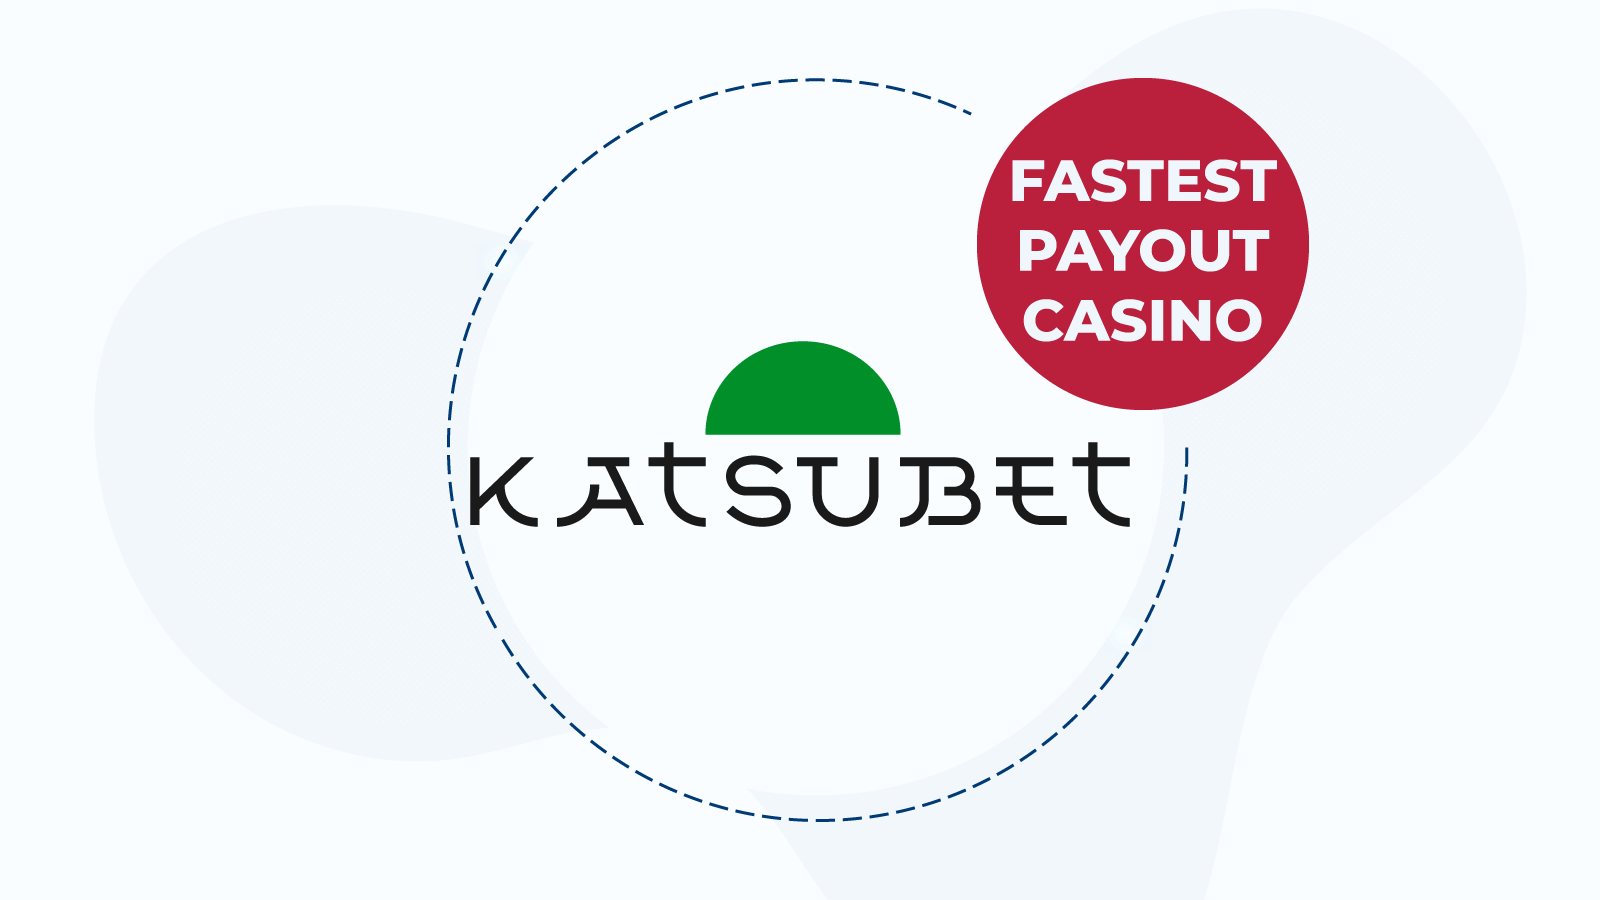 Katsubet – The fastest payout casino